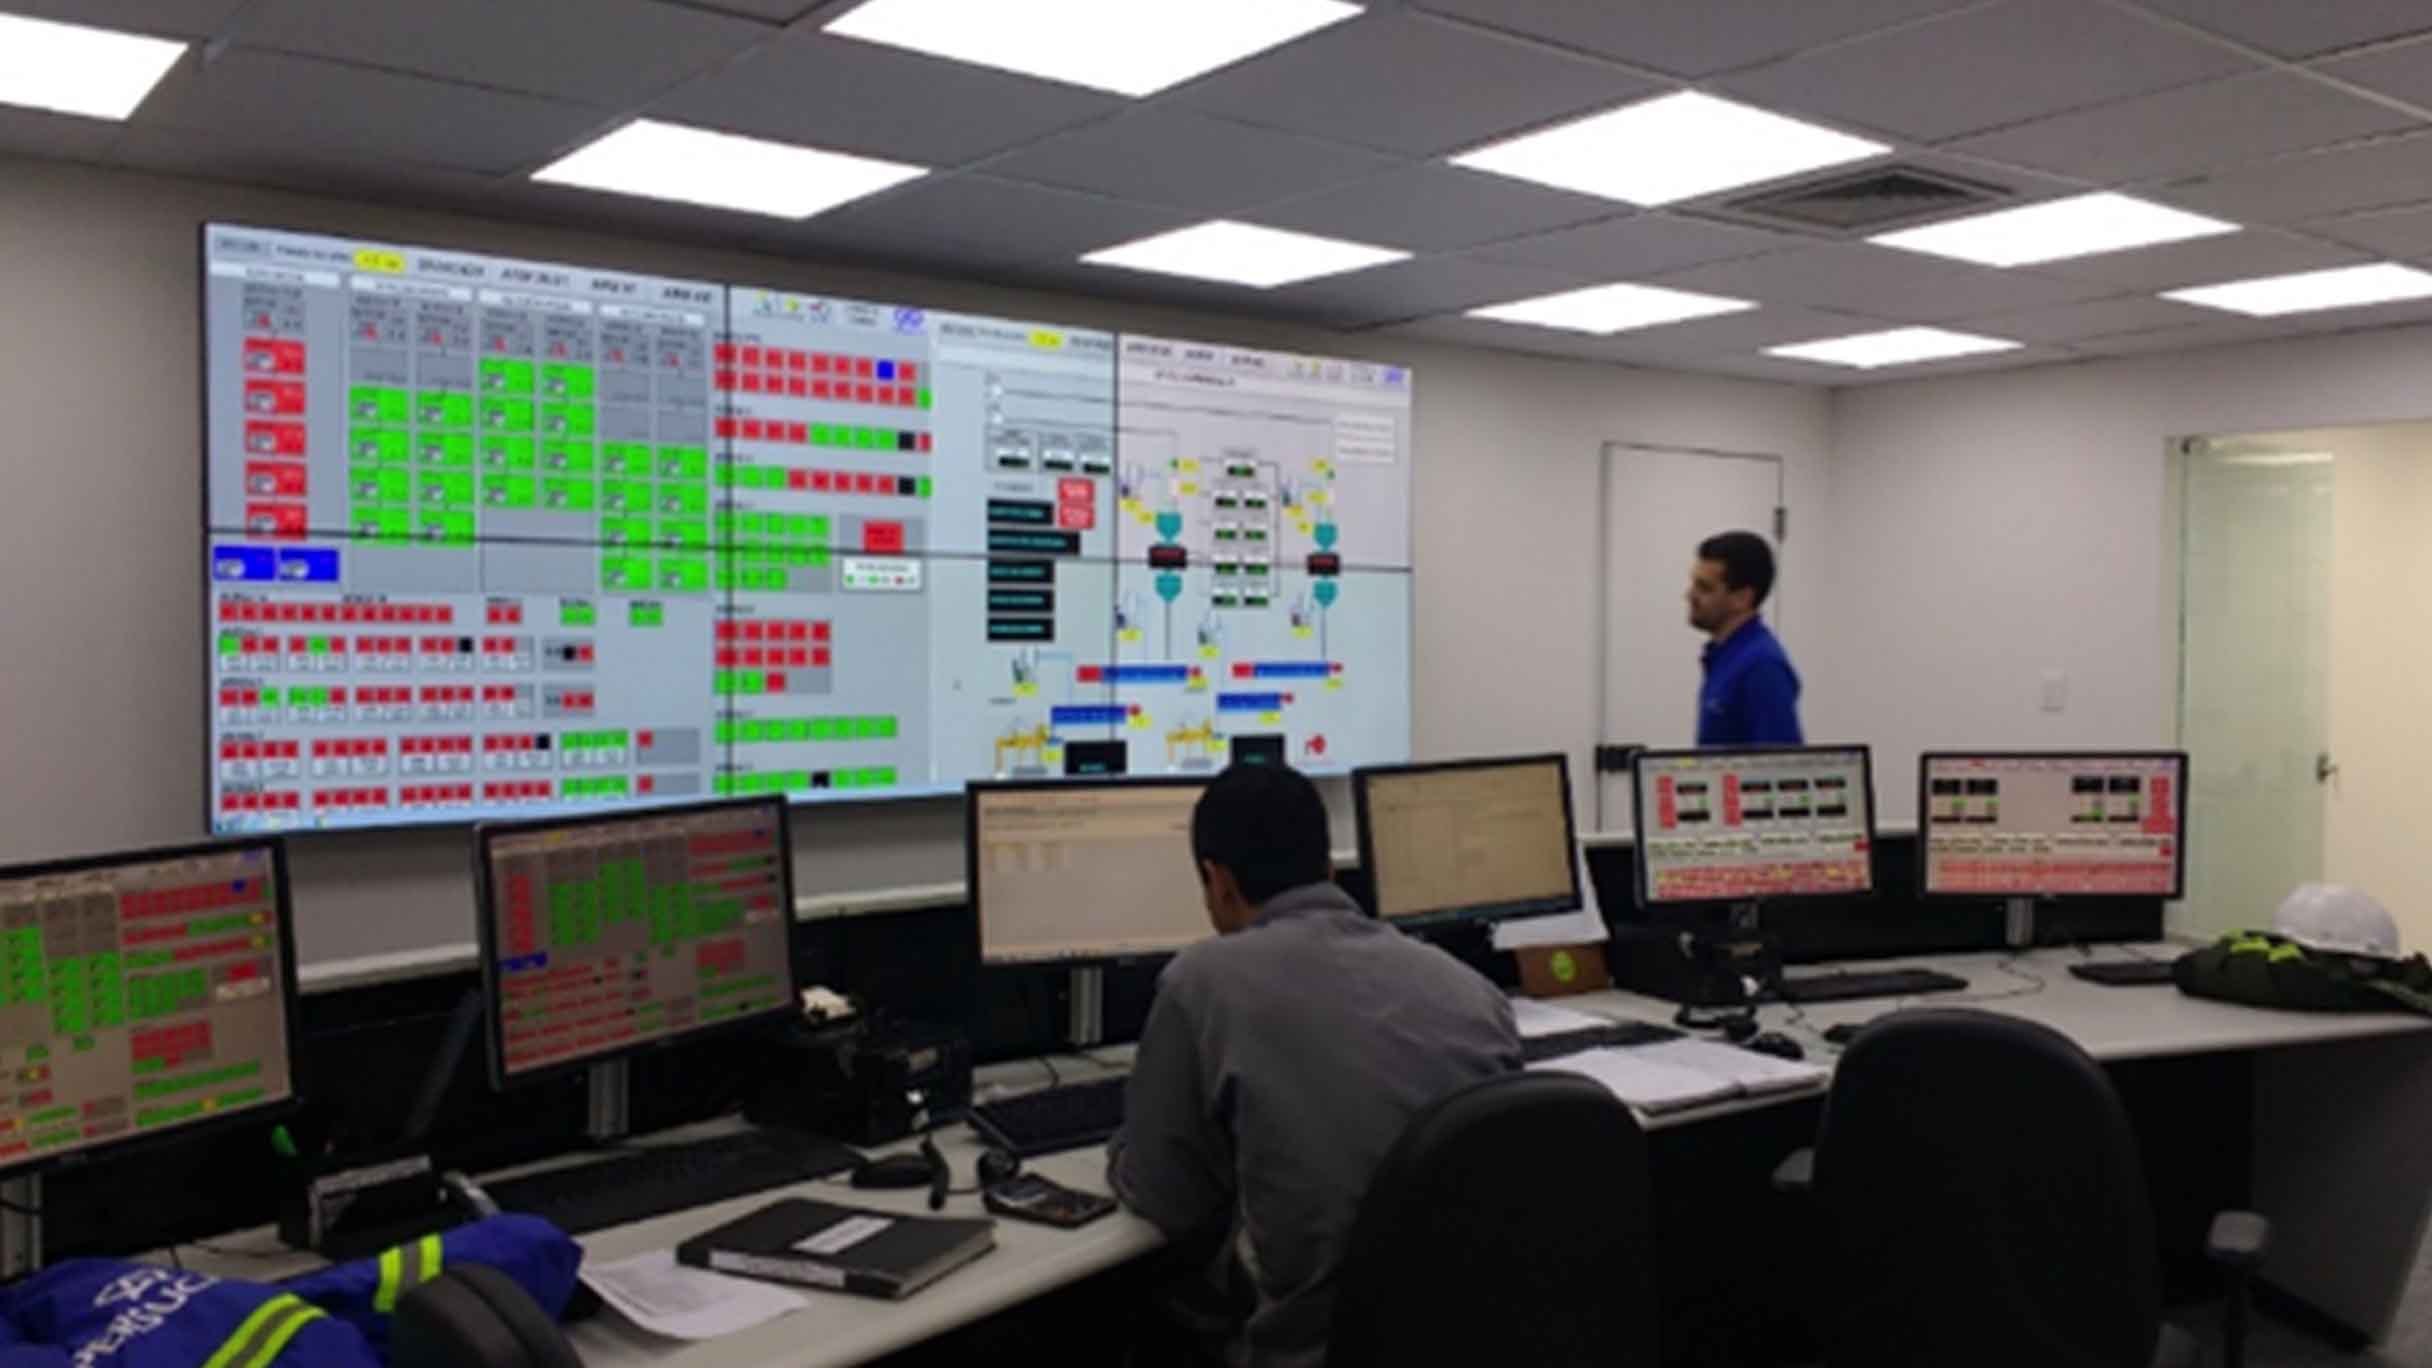 Operational Control Center of the Copersucar Sugar Terminal (TAC) using GE Digital software